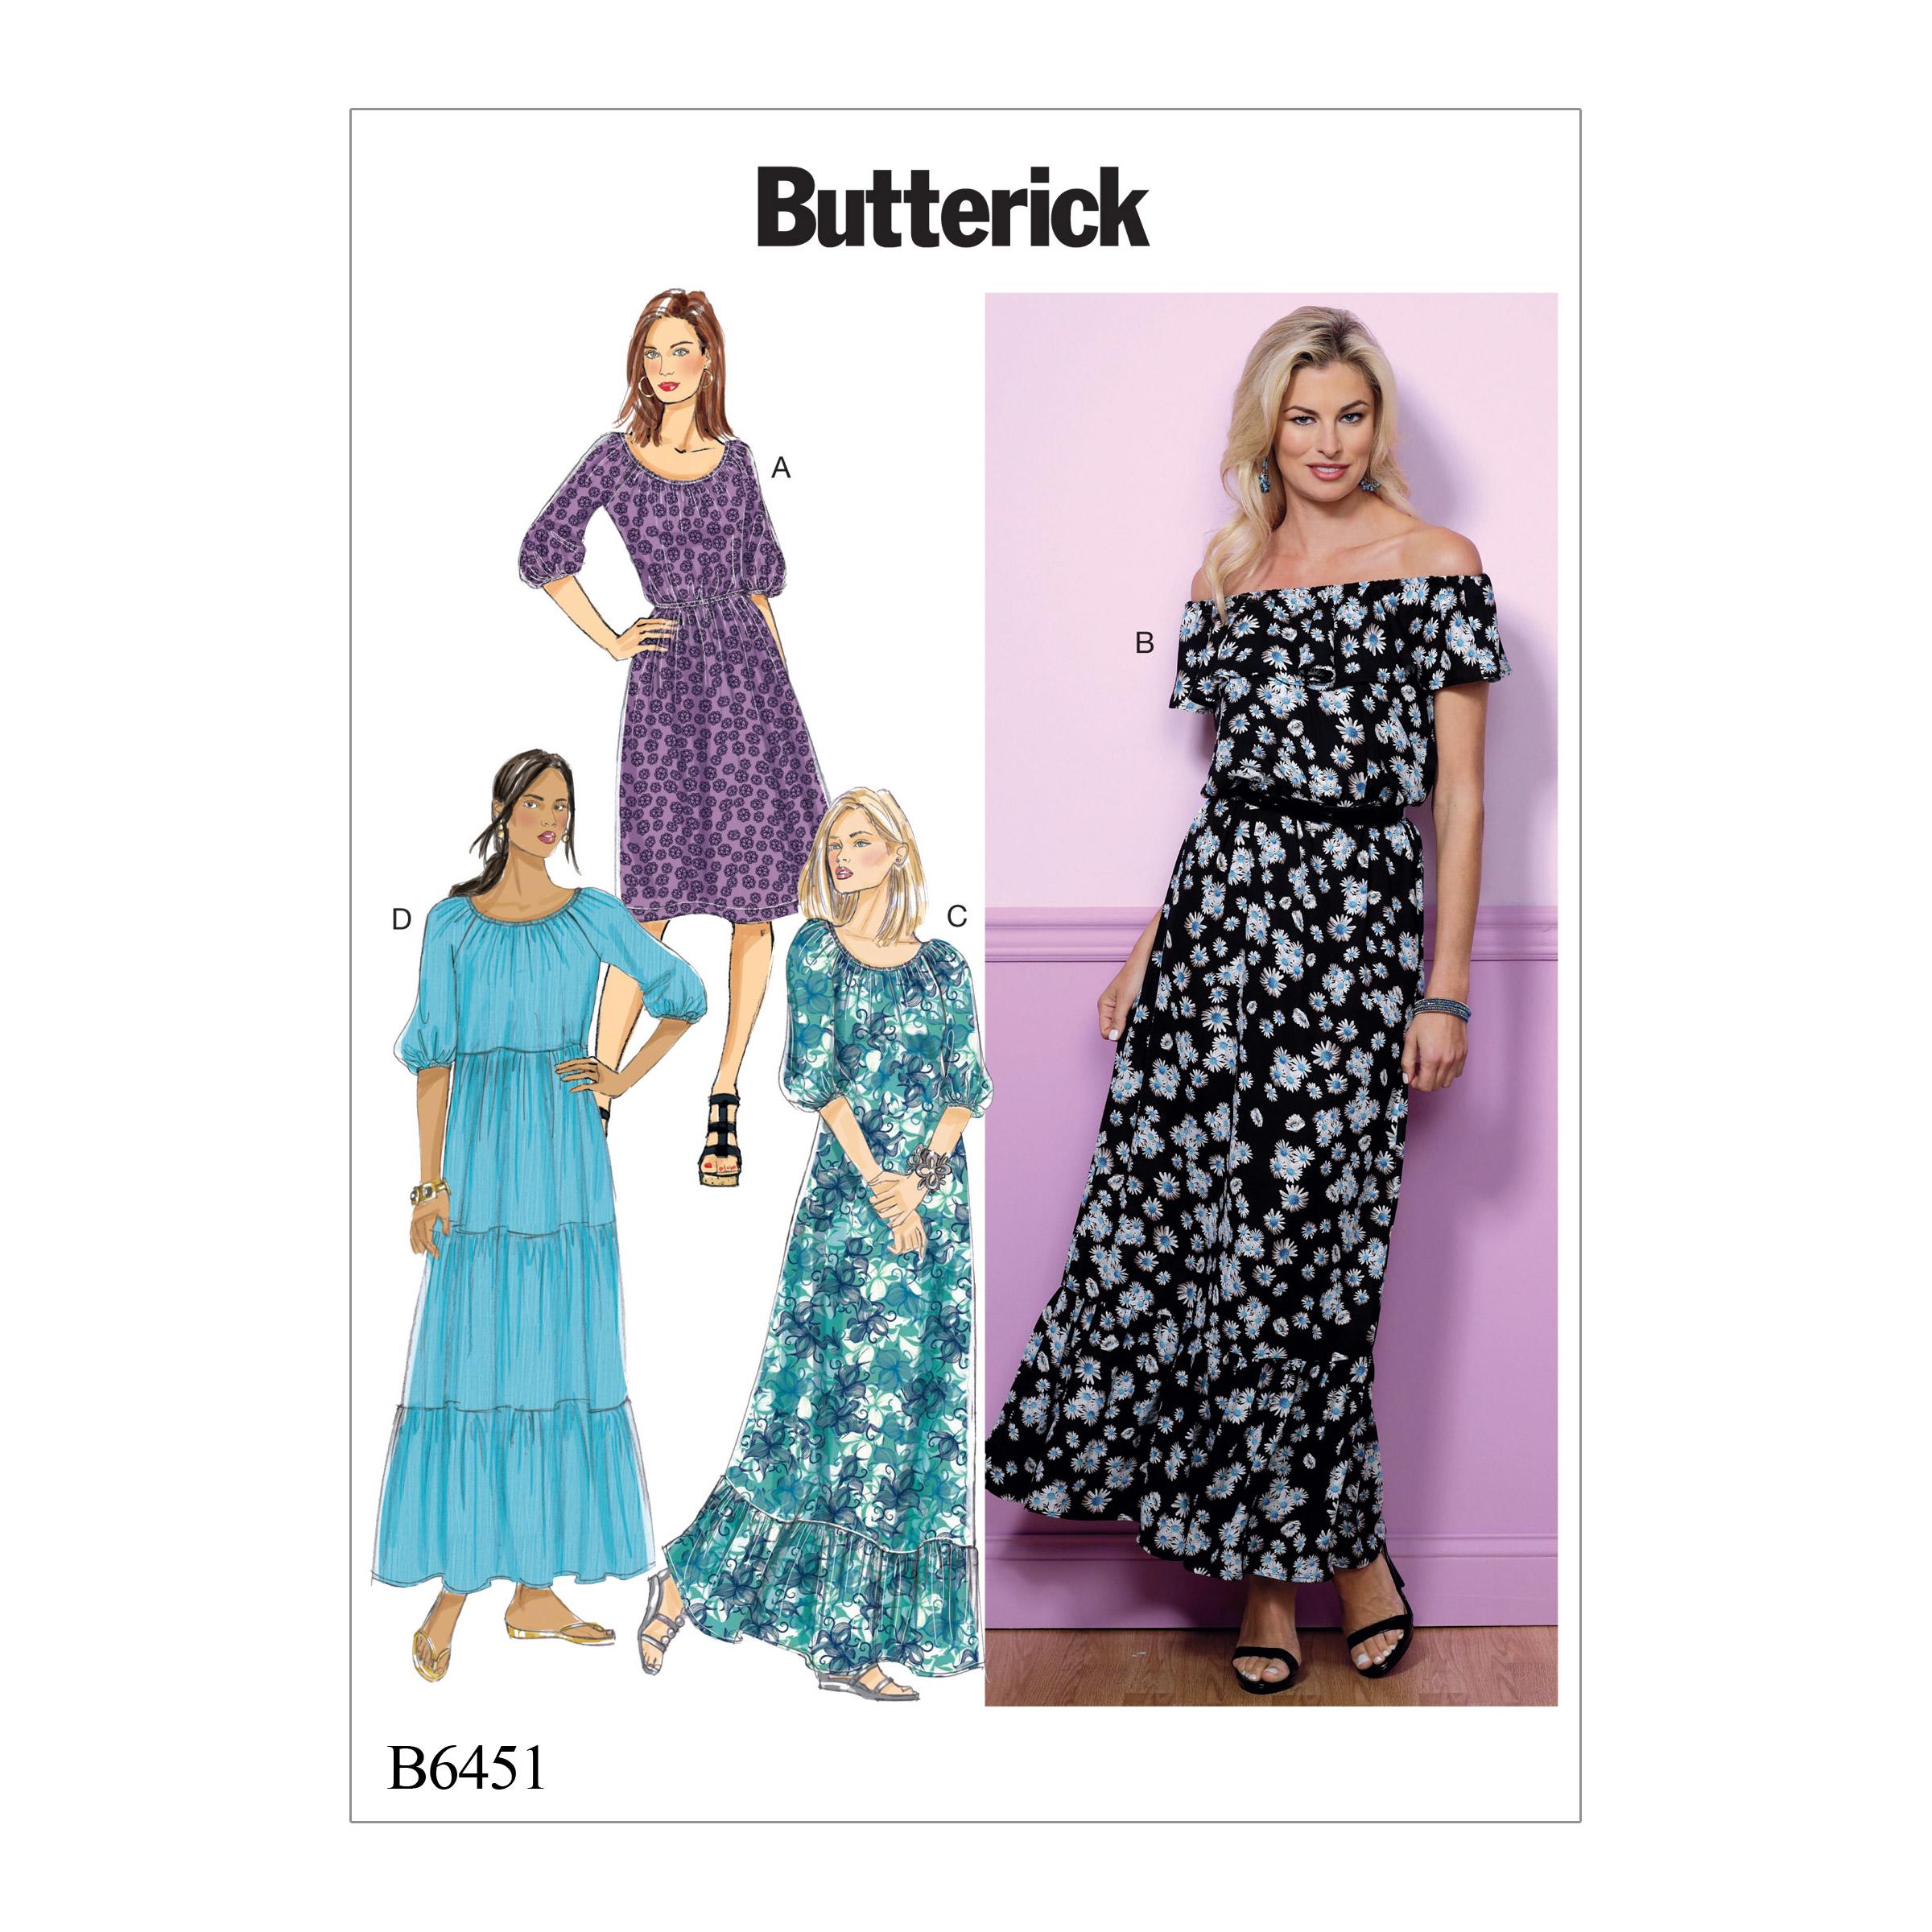 Butterick B6451 Misses' Gathered, Blouson Dresses